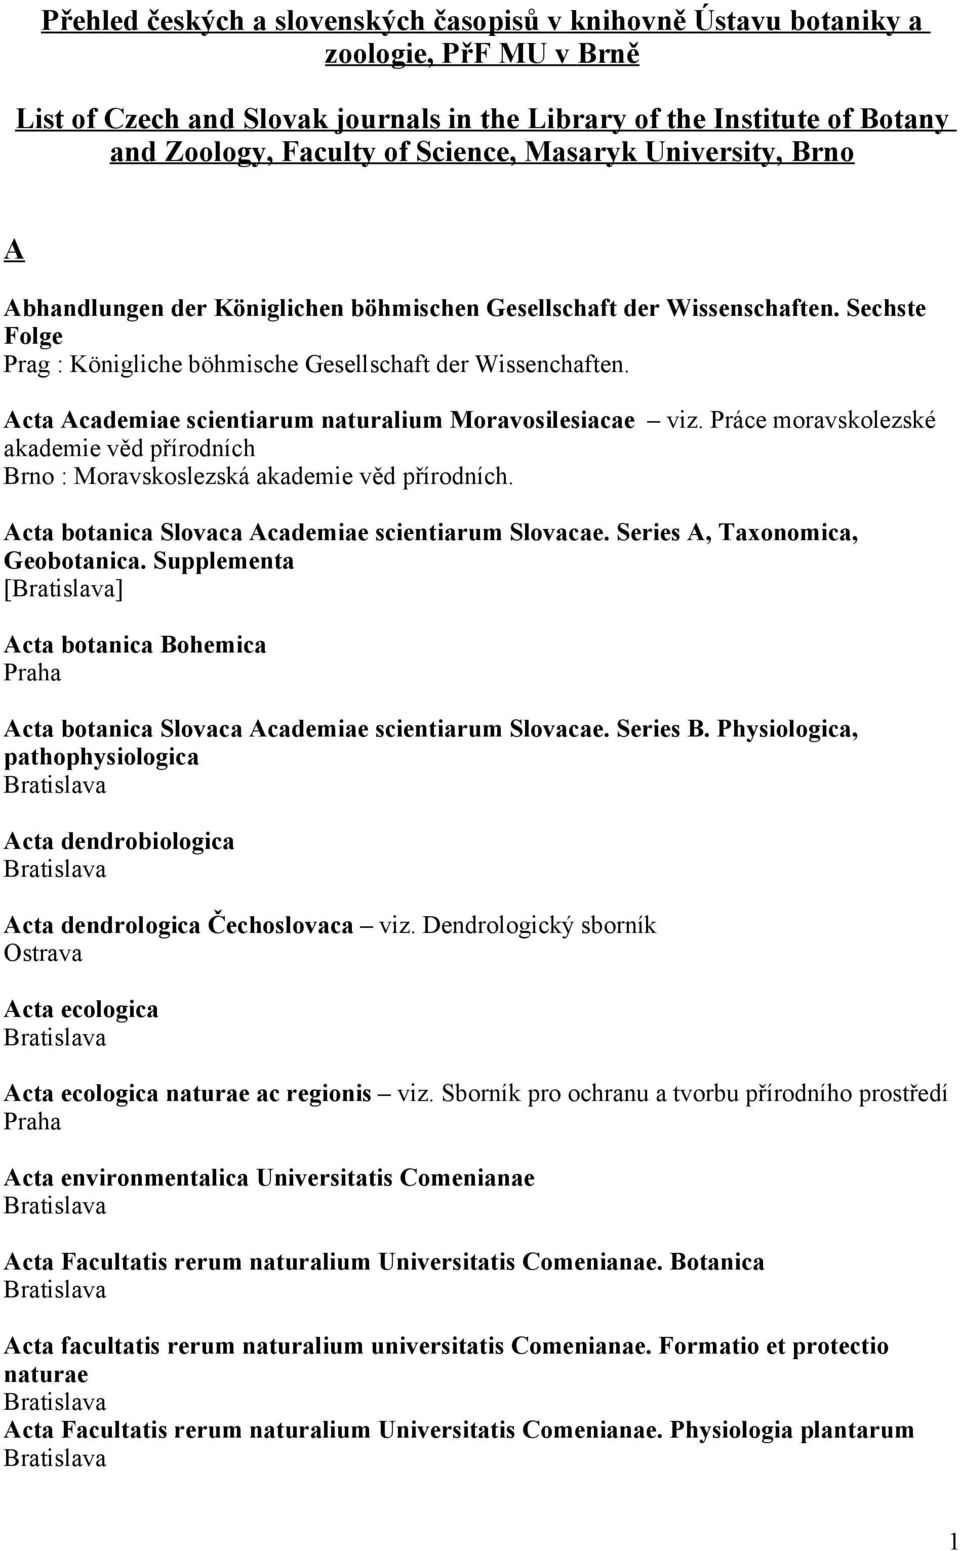 Acta Academiae scientiarum naturalium Moravosilesiacae viz. Práce moravskolezské akademie věd přírodních : Moravskoslezská akademie věd přírodních.